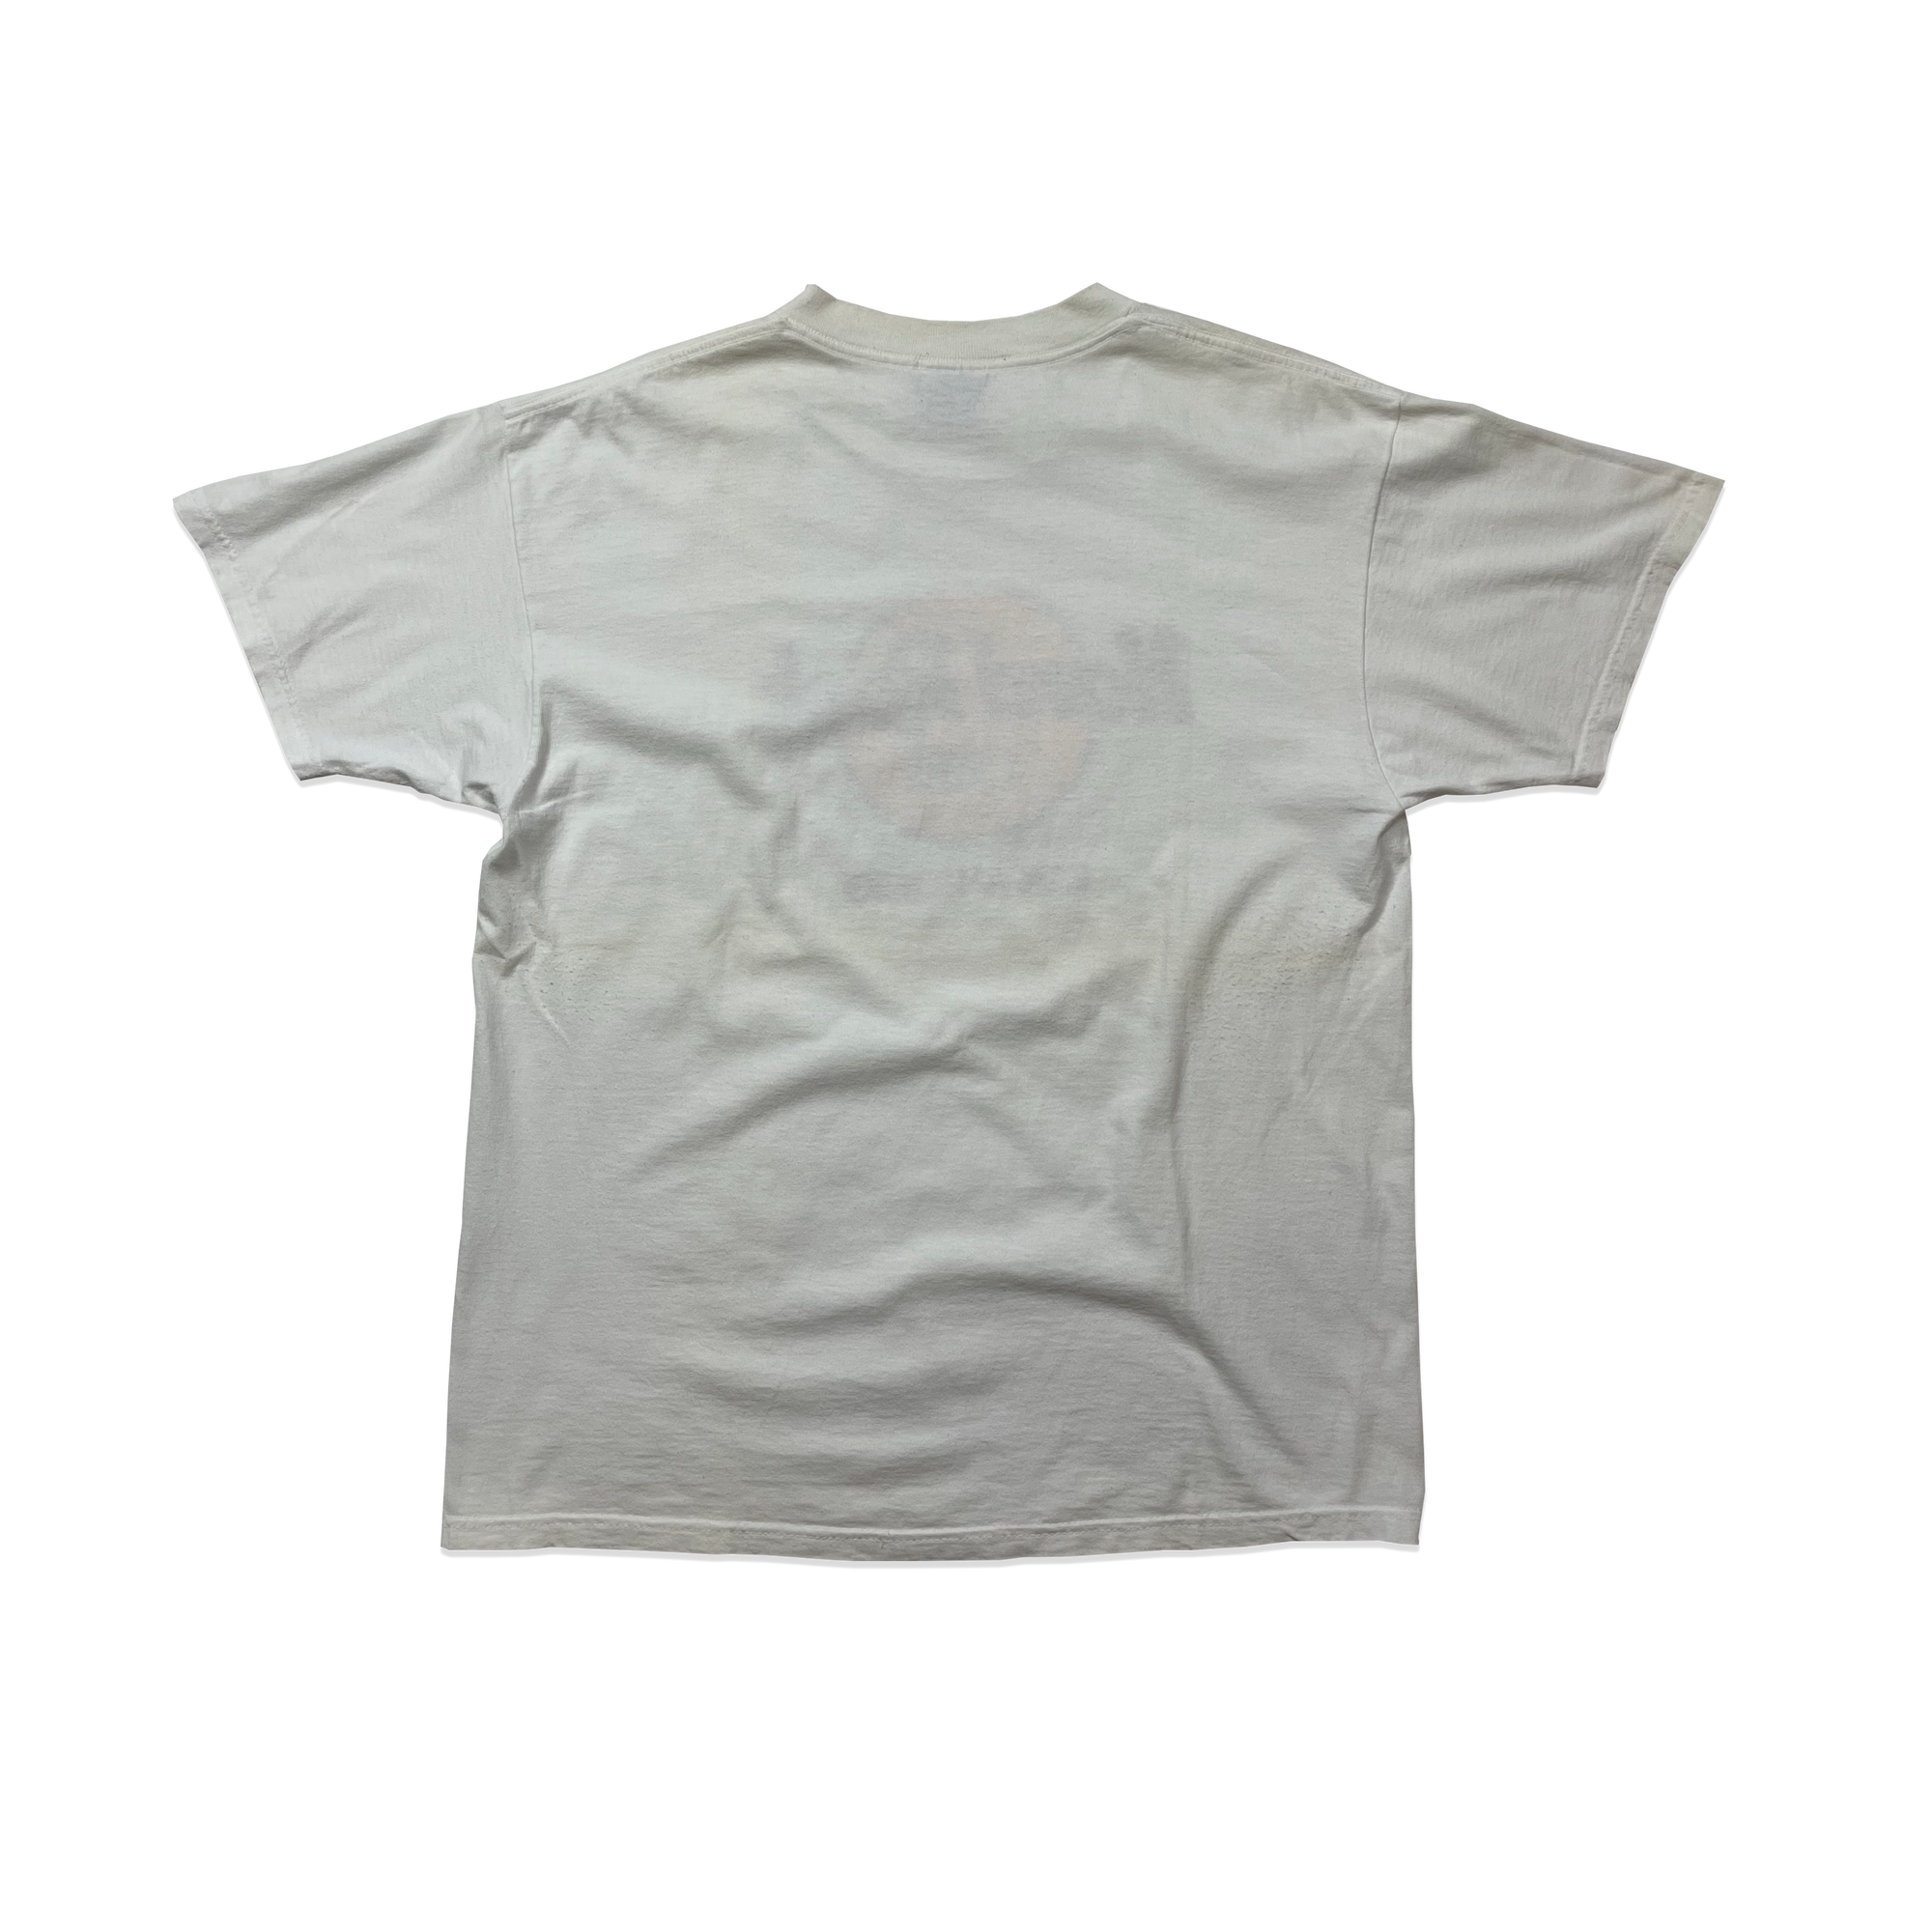 T-shirt - Hard Rock Café San Antonio - Blanc